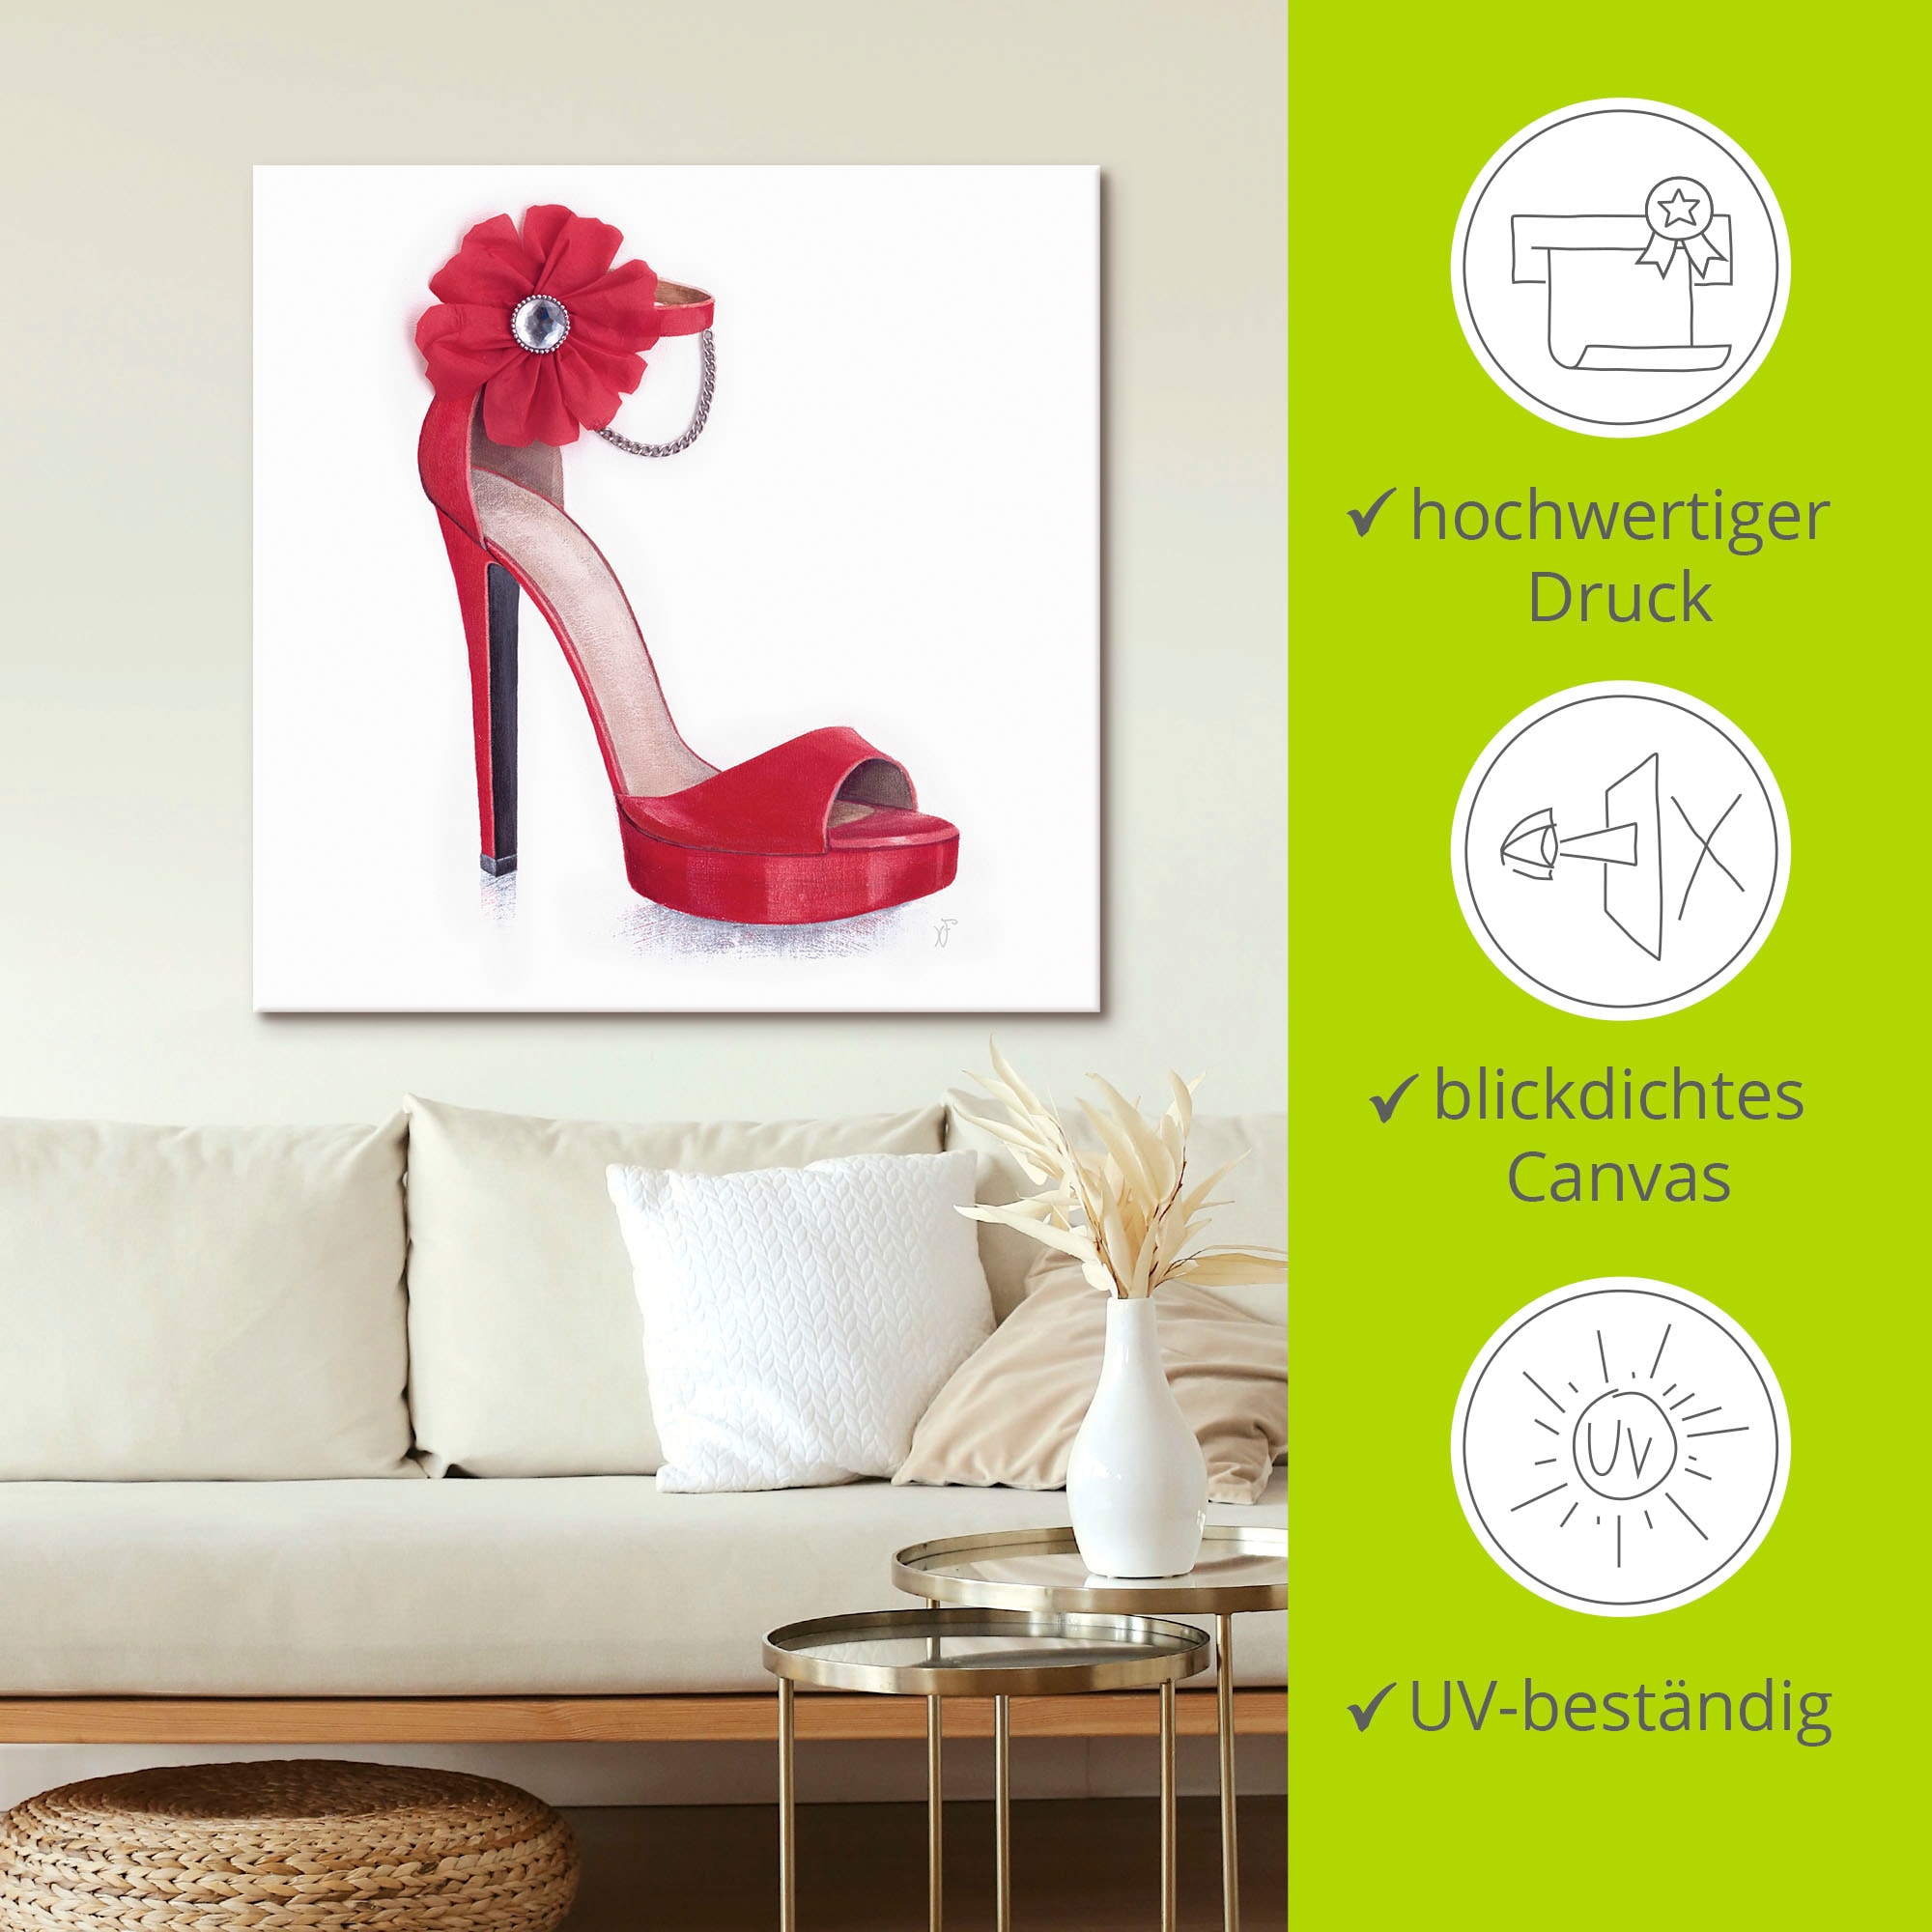 Artland Leinwandbild »Damenschuh - Rotes Modell«, Modebilder, (1 St.), auf Keilrahmen gespannt